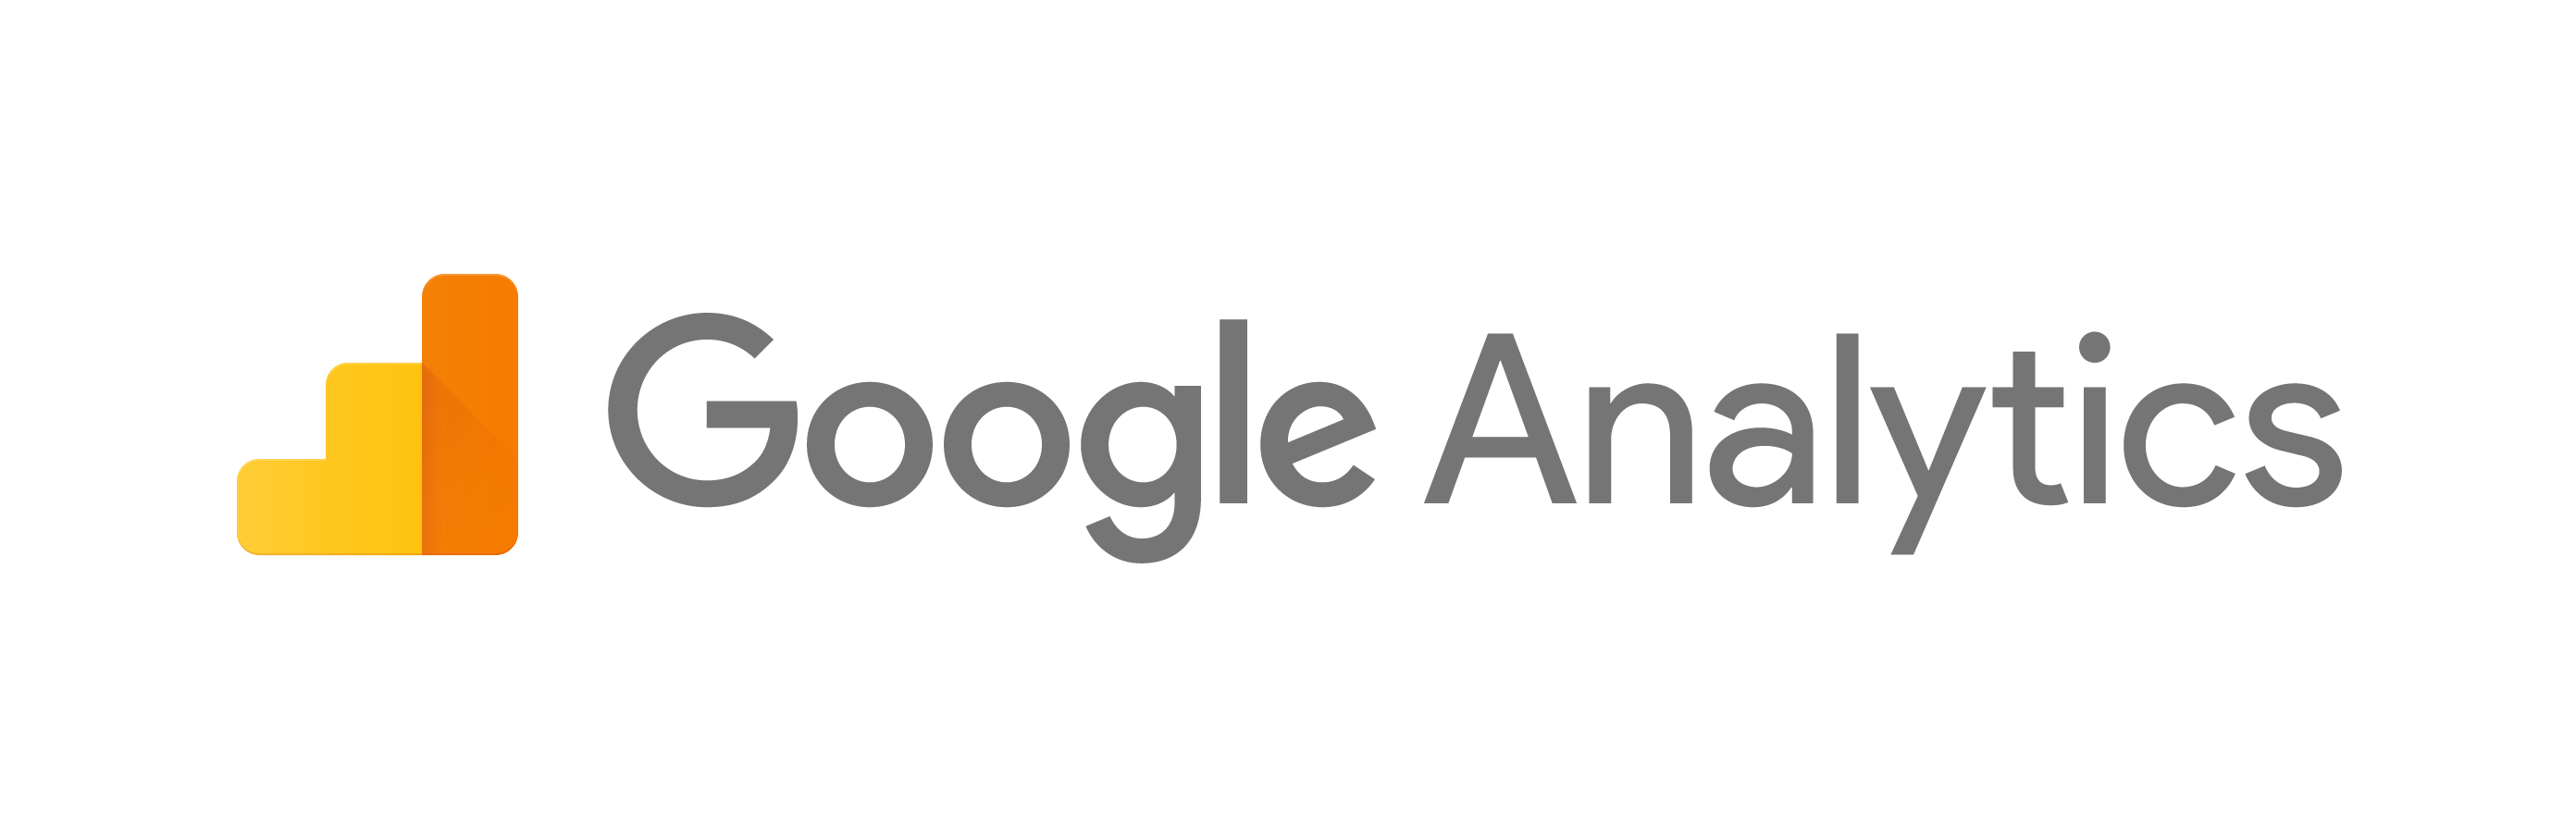 Google_Analytics_05-2016.png